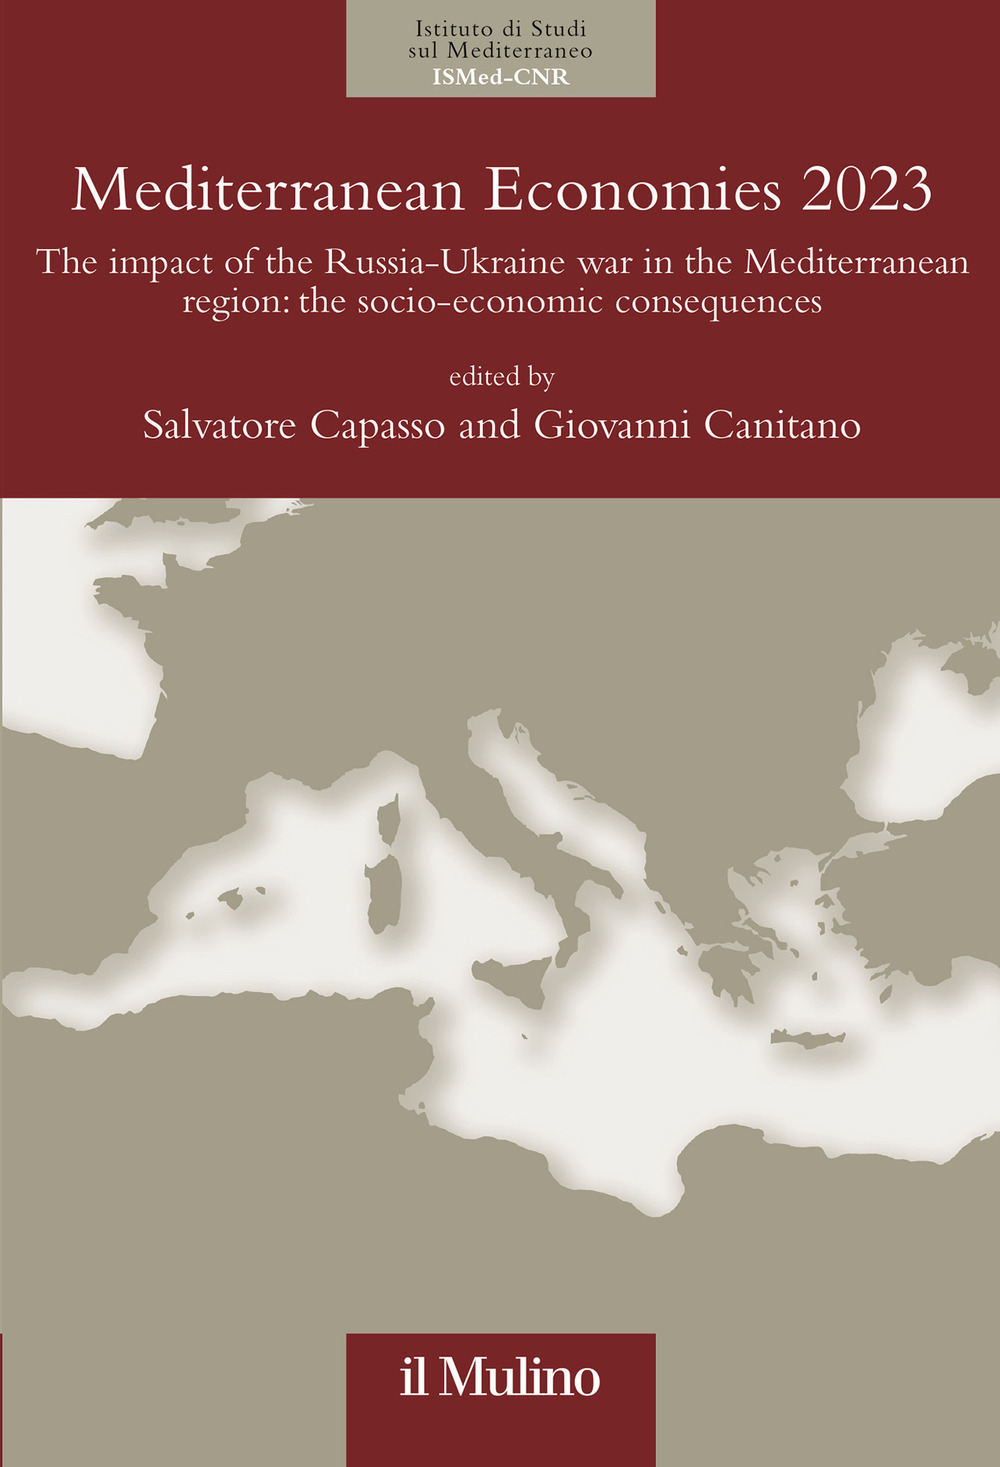 Mediterranean economies 2023. The impact of the Russia-Ukraine war in the Mediterranean region: the socio-economic consequences